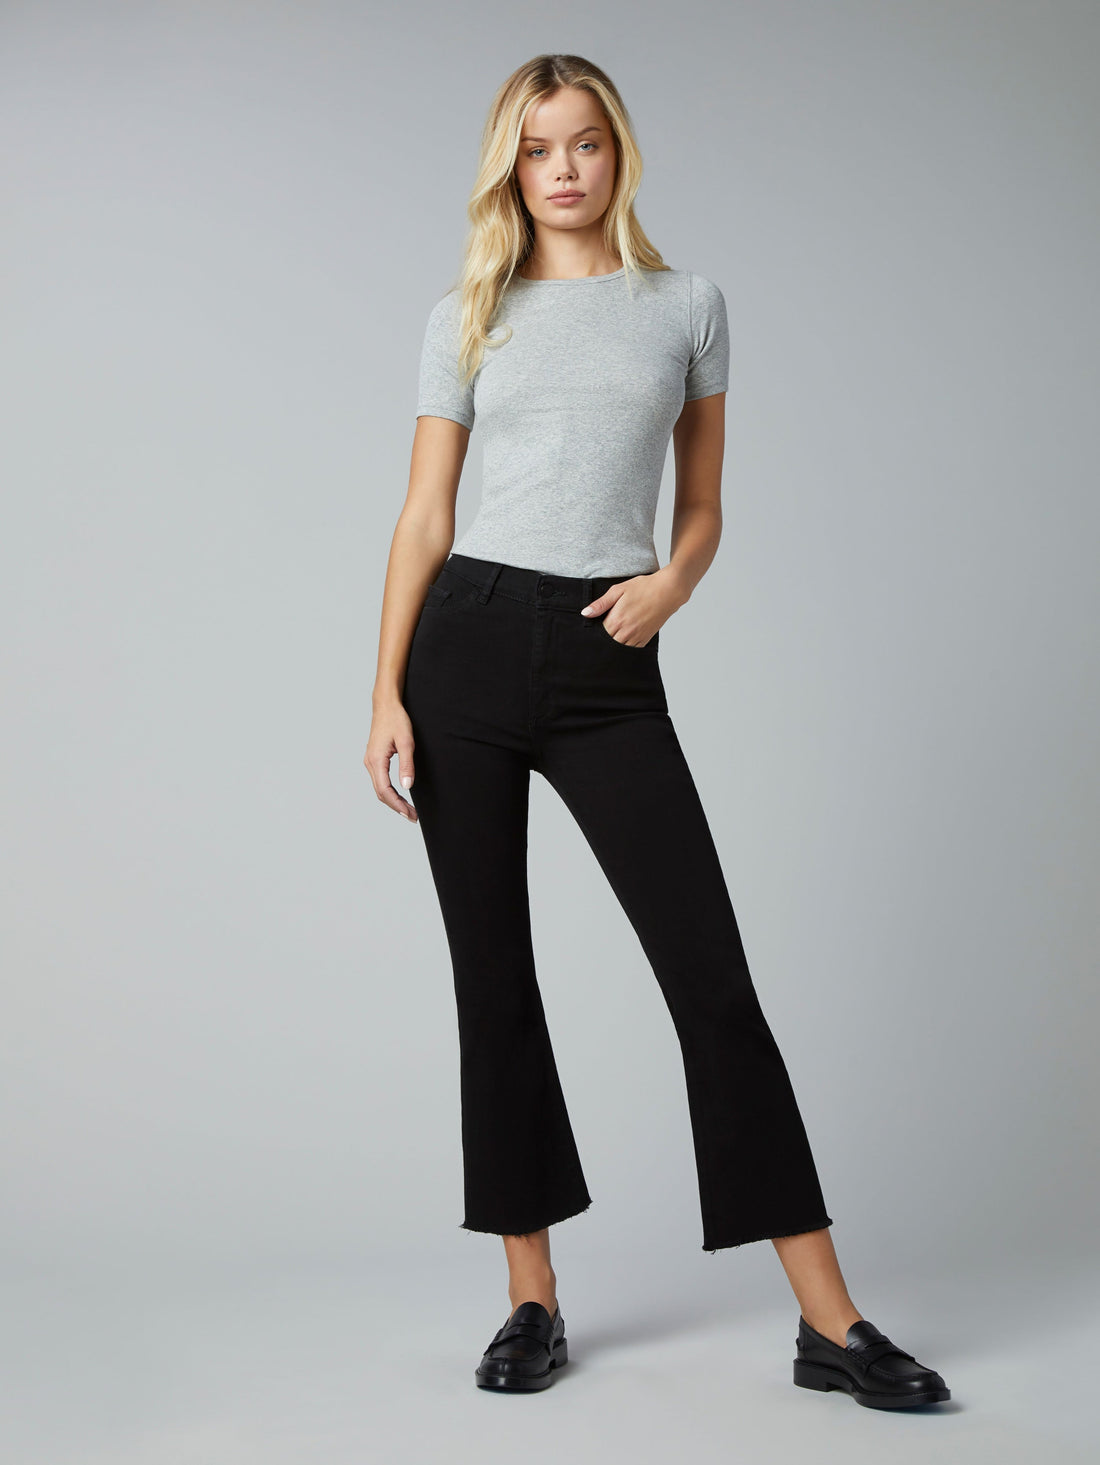 Bridget Henderson Bootcut High Rise Crop Jeans - FINAL SALE - Premium Denim Denim from DL1961 - Just $75! Shop now at shopthedenimbar